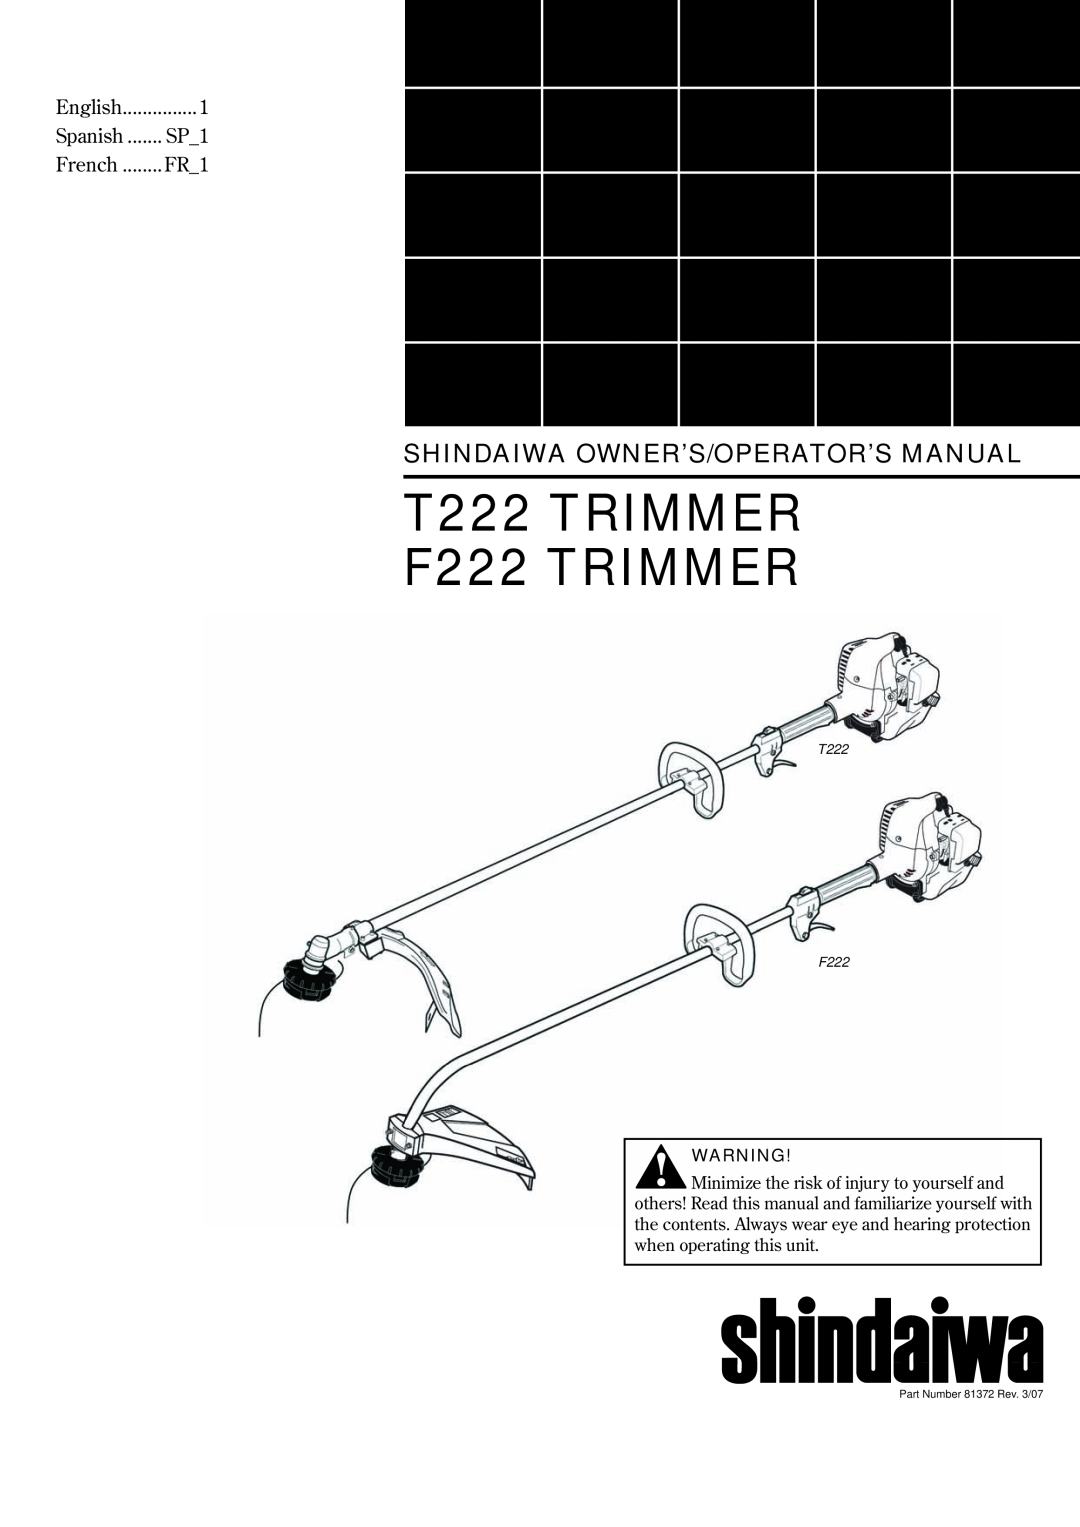 Shindaiwa manual T222 TRIMMER F222 TRIMMER, Shindaiwa Owner’S/Operator’S Manual, English, SP_1, FR_1, Spanish, French 